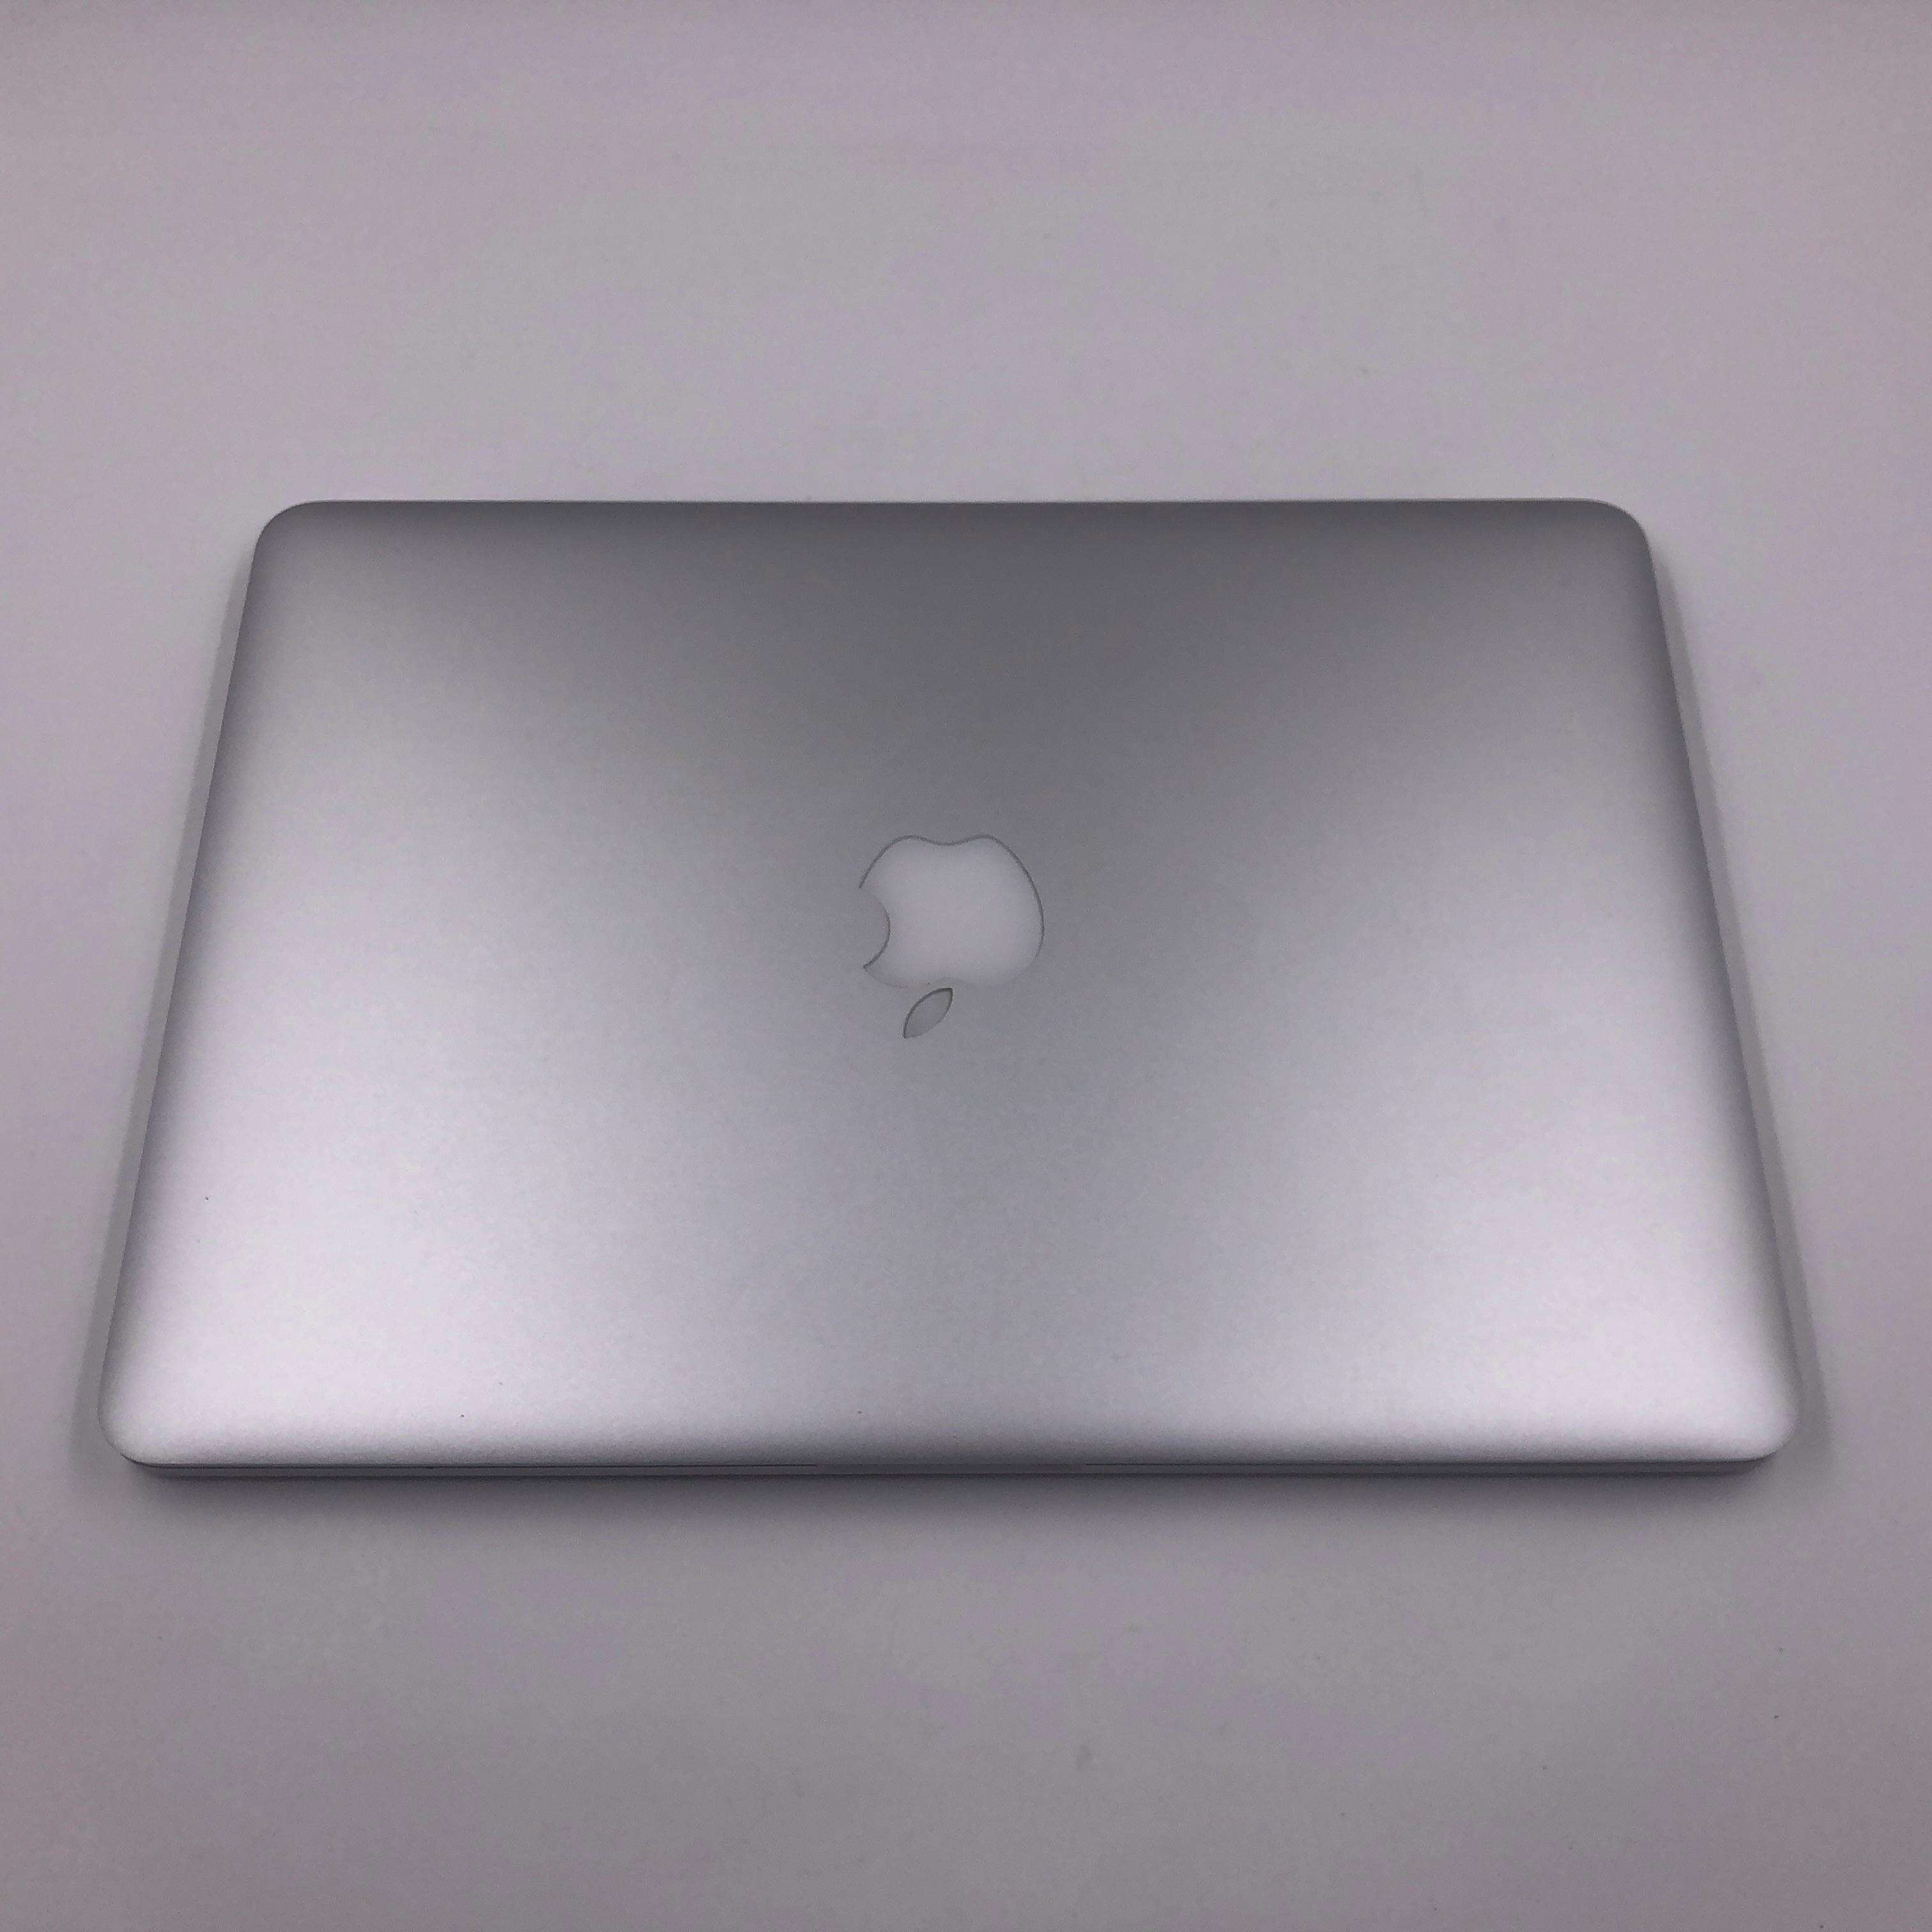 MacBook Pro (13",2013) 内存_8G/CPU_2.4 GHz Intel Core i5/硬盘_256G 非国行